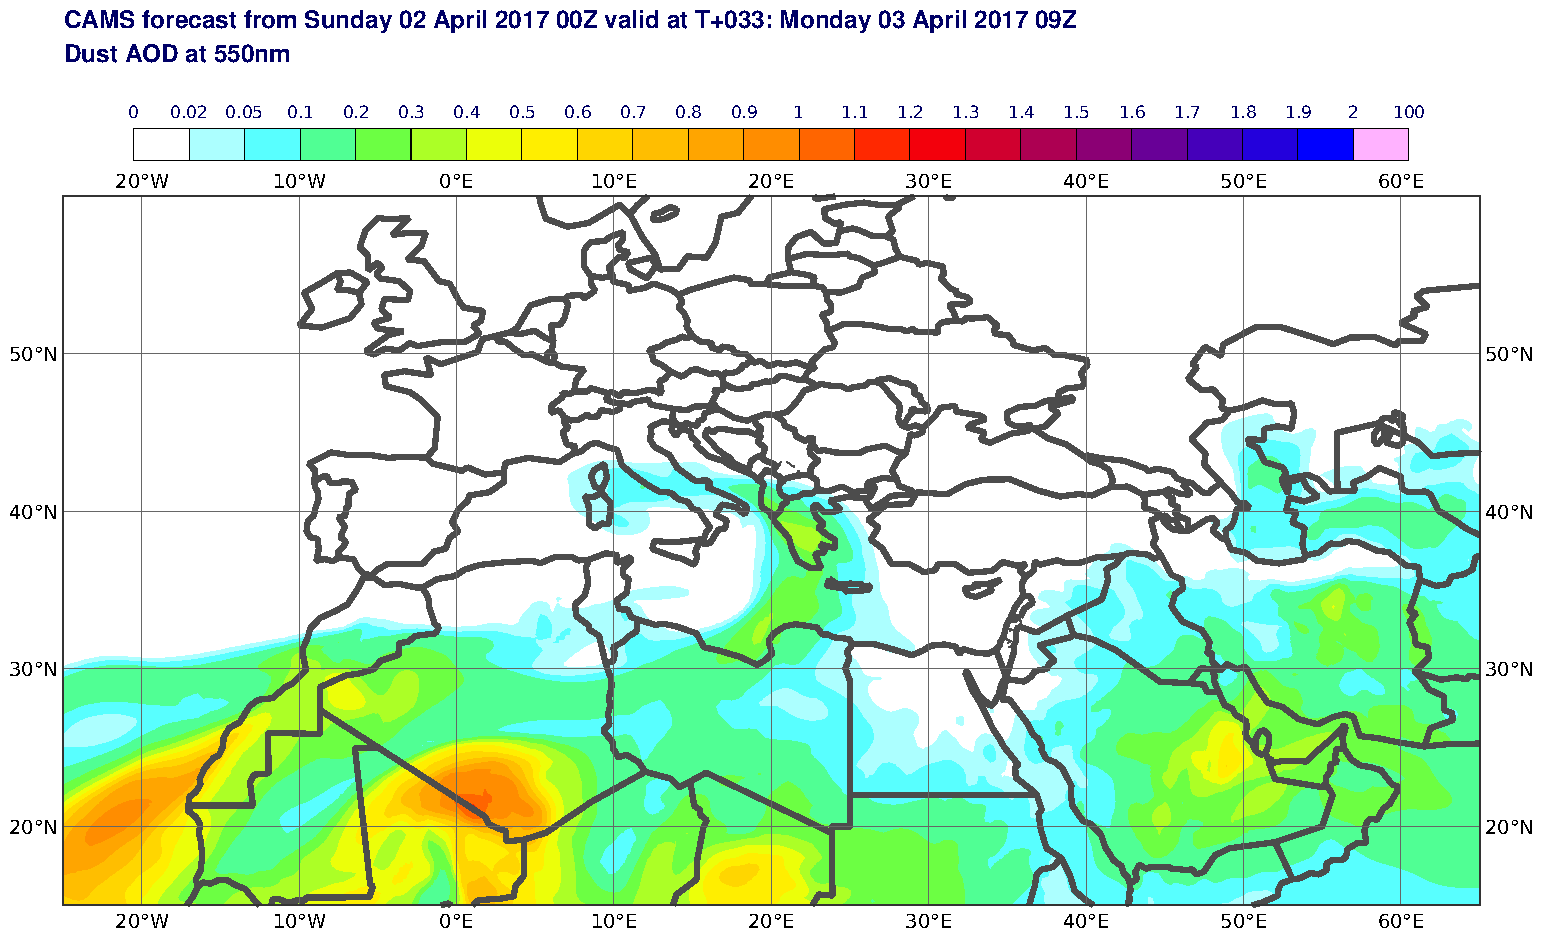 Dust AOD at 550nm valid at T33 - 2017-04-03 09:00